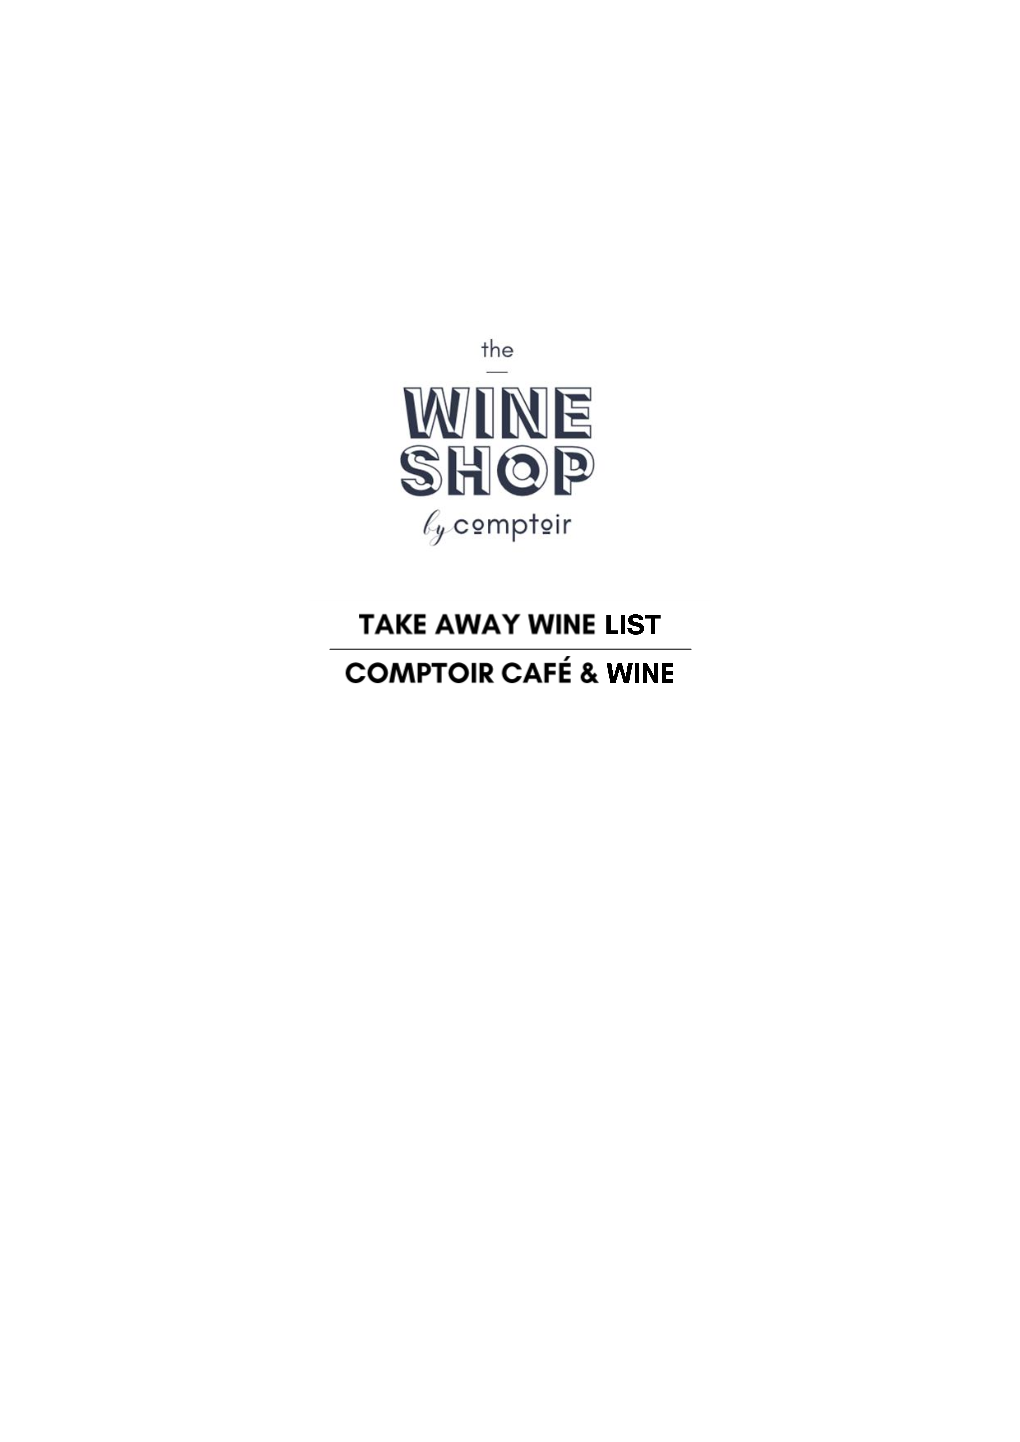 Take-Away-Wine-List-FINAL-01.11